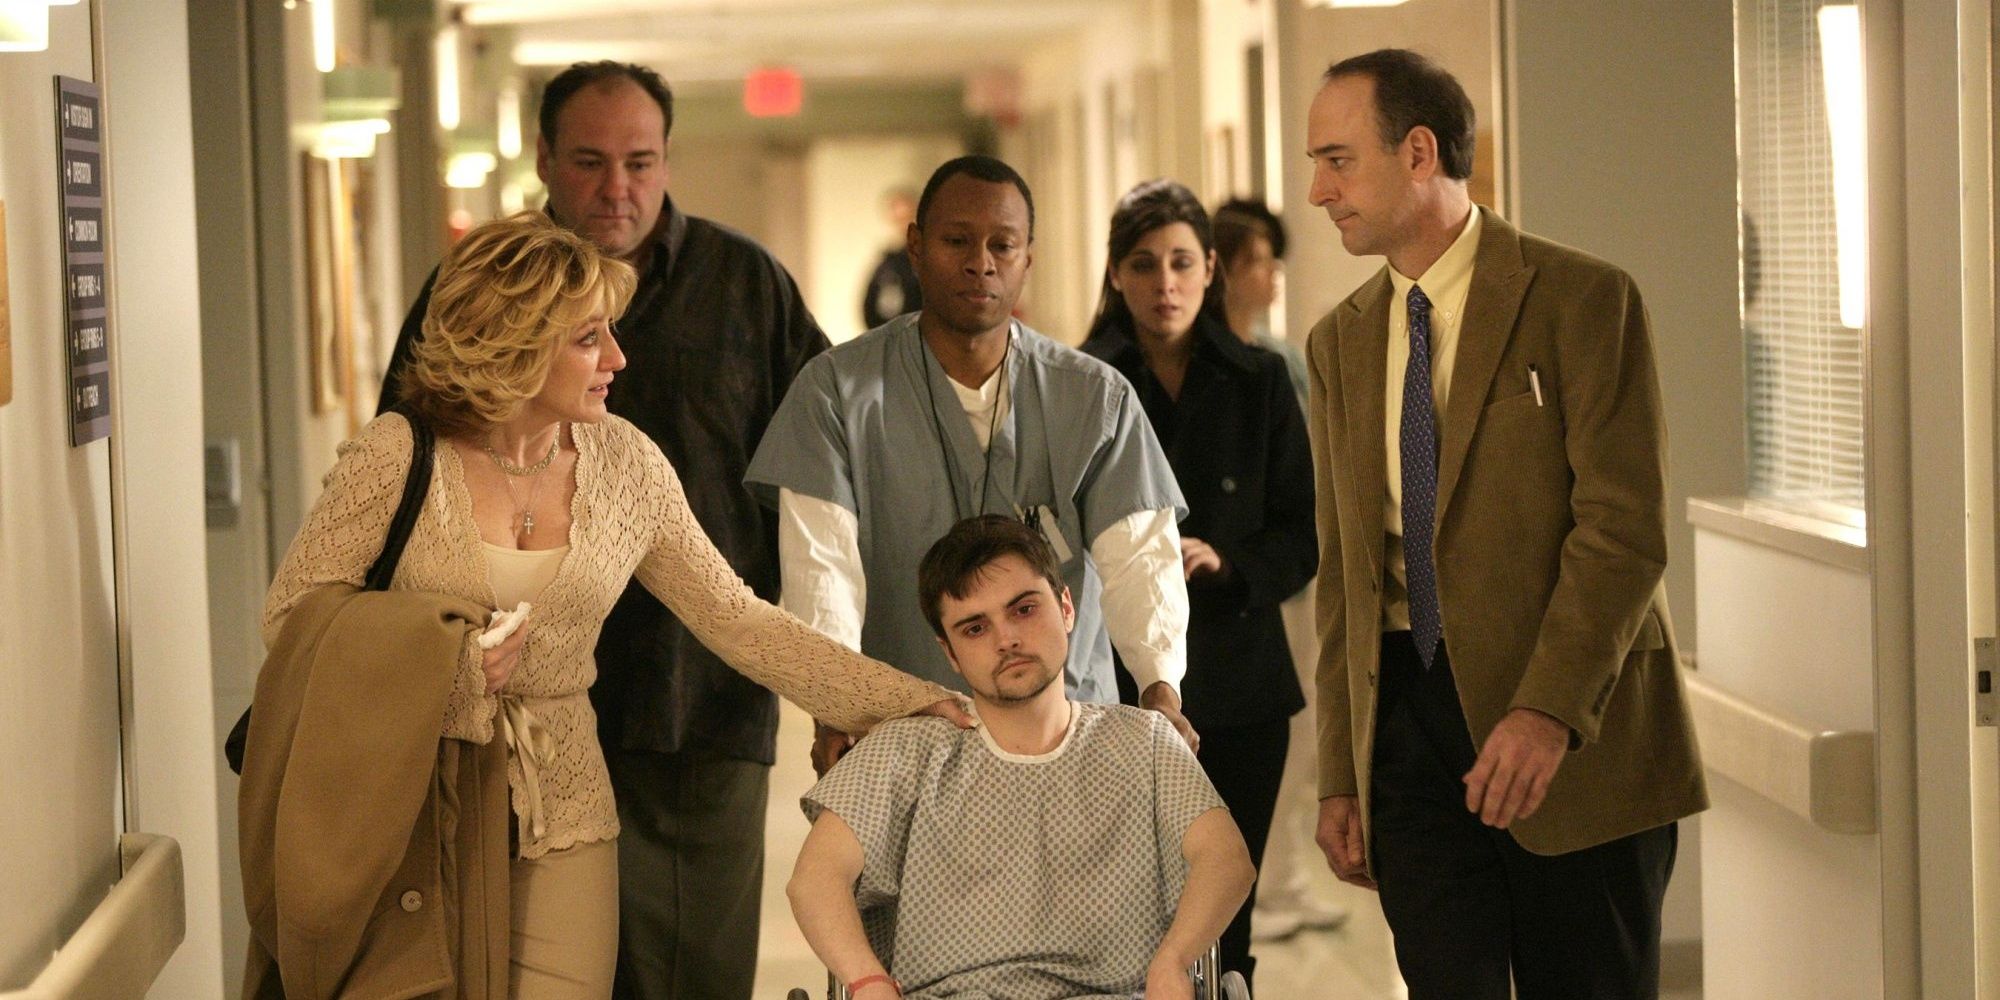 The Sopranos: AJ being wheeled through a hospital